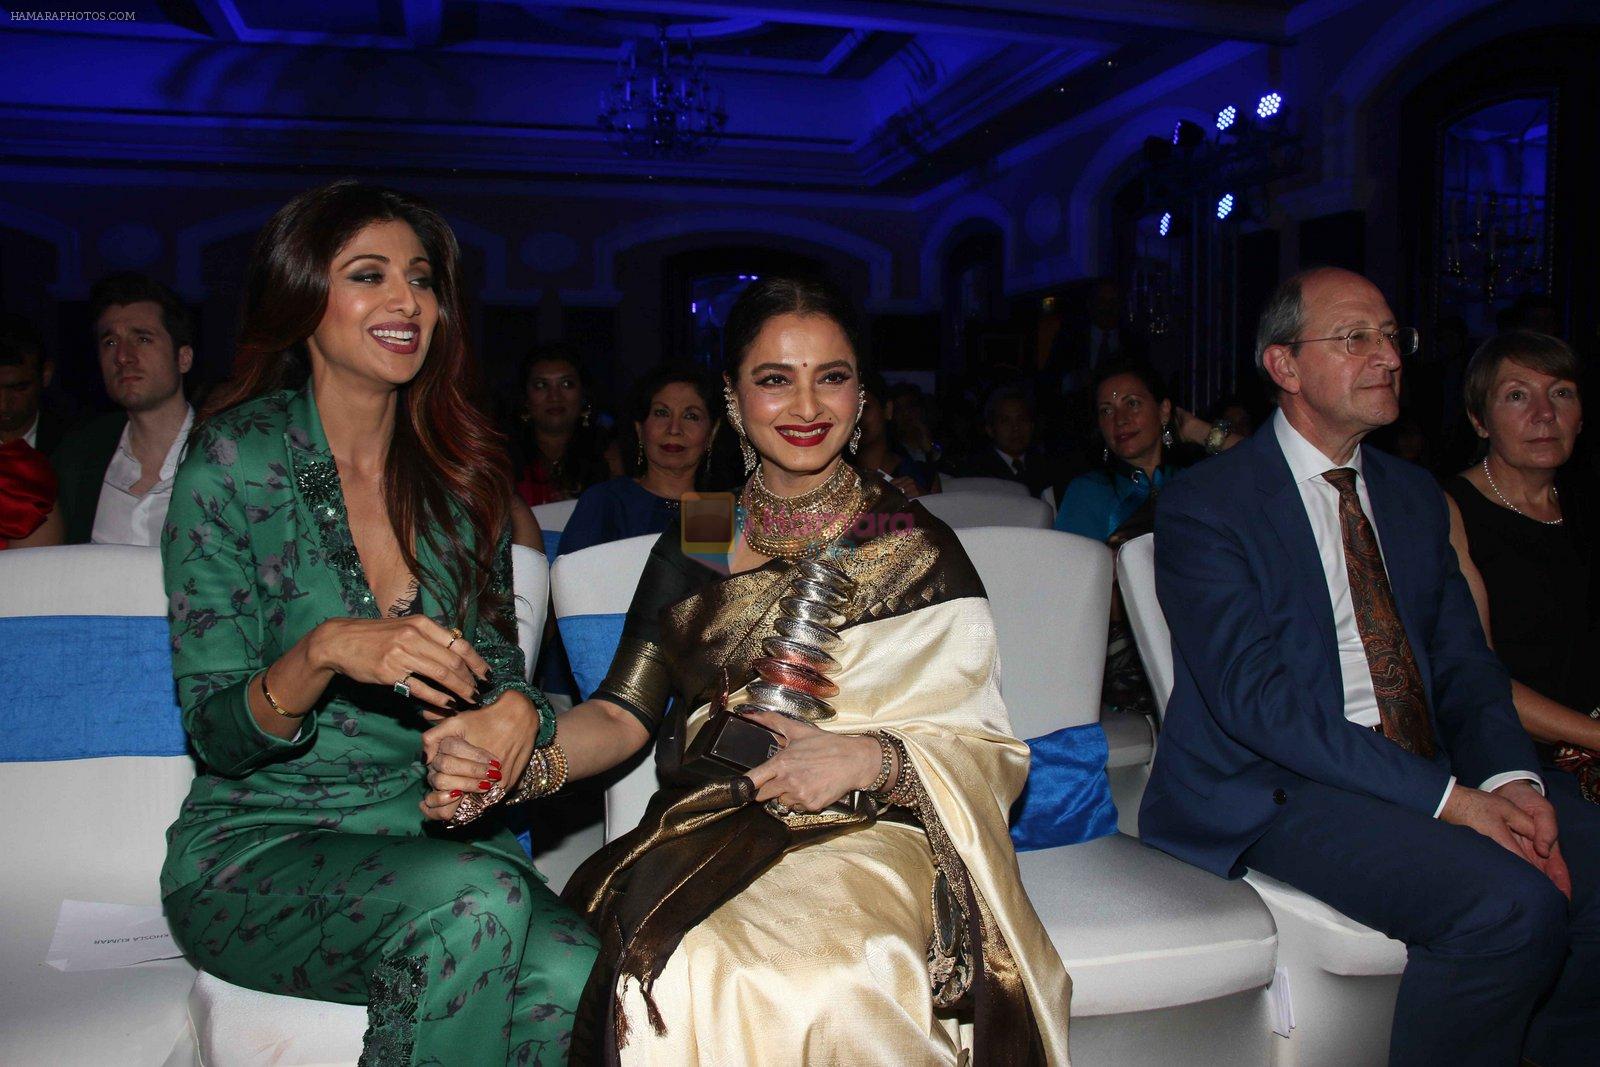 Shilpa Shetty, Rekha at Asia Spa Awards in Mumbai on 3rd March 2016